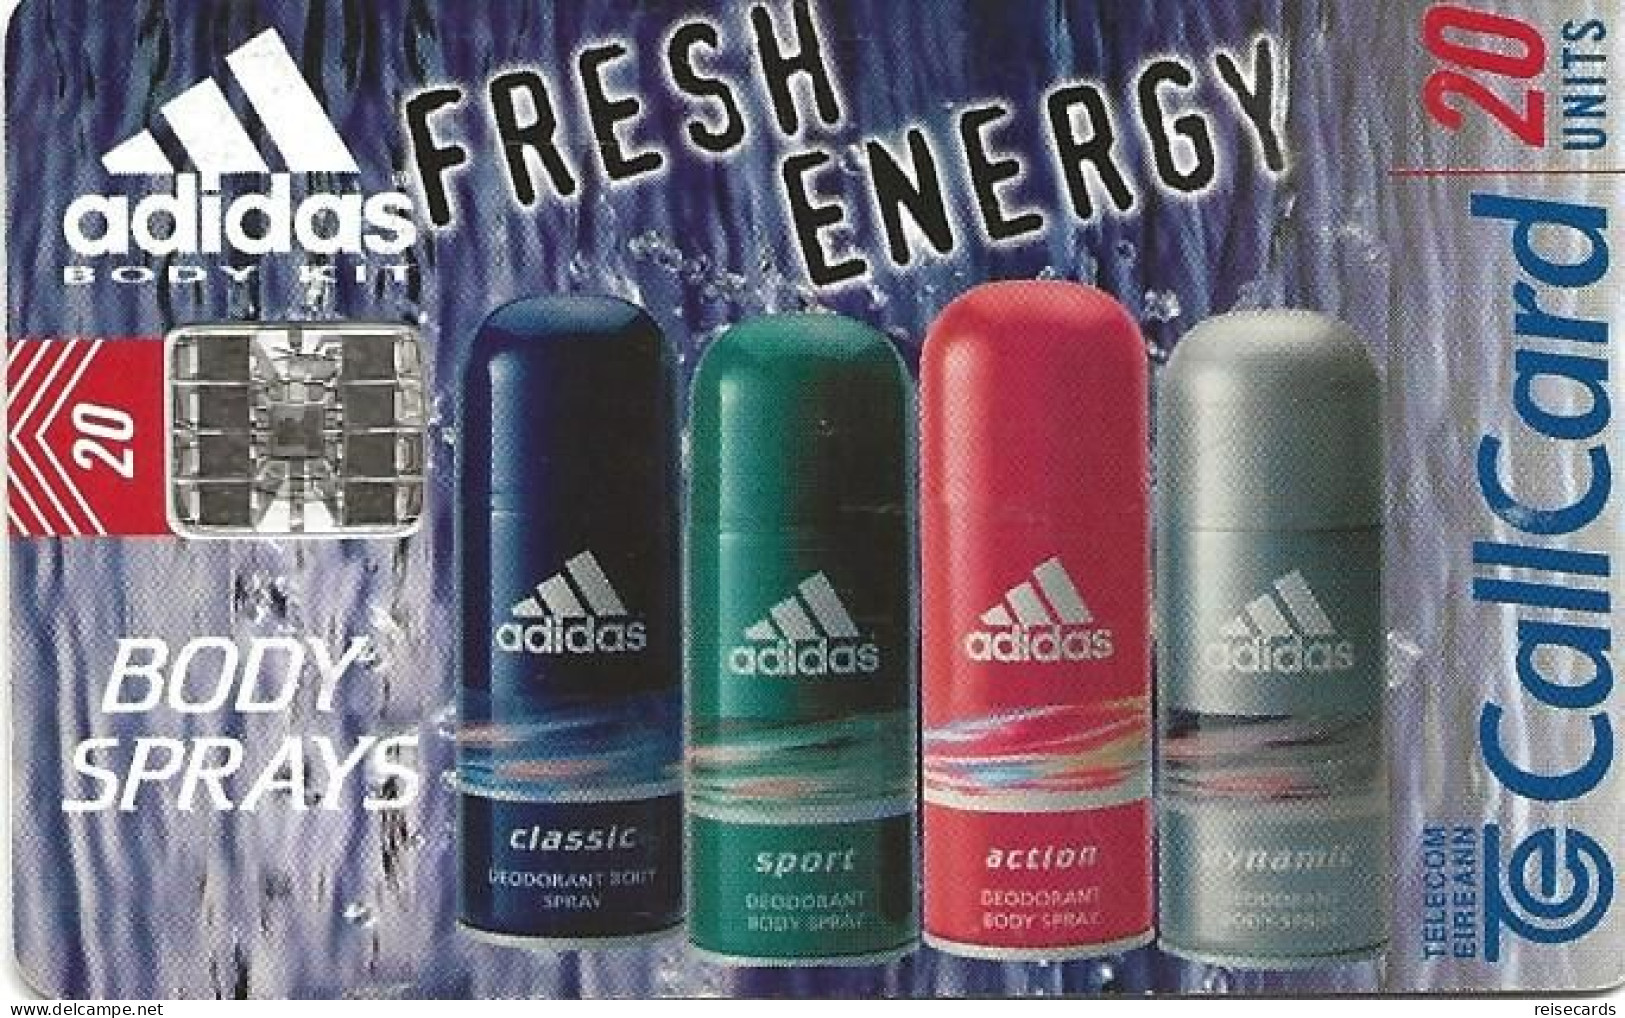 Ireland: Telecom Eireann - 1998 Adidas Body Sprays - Irlanda